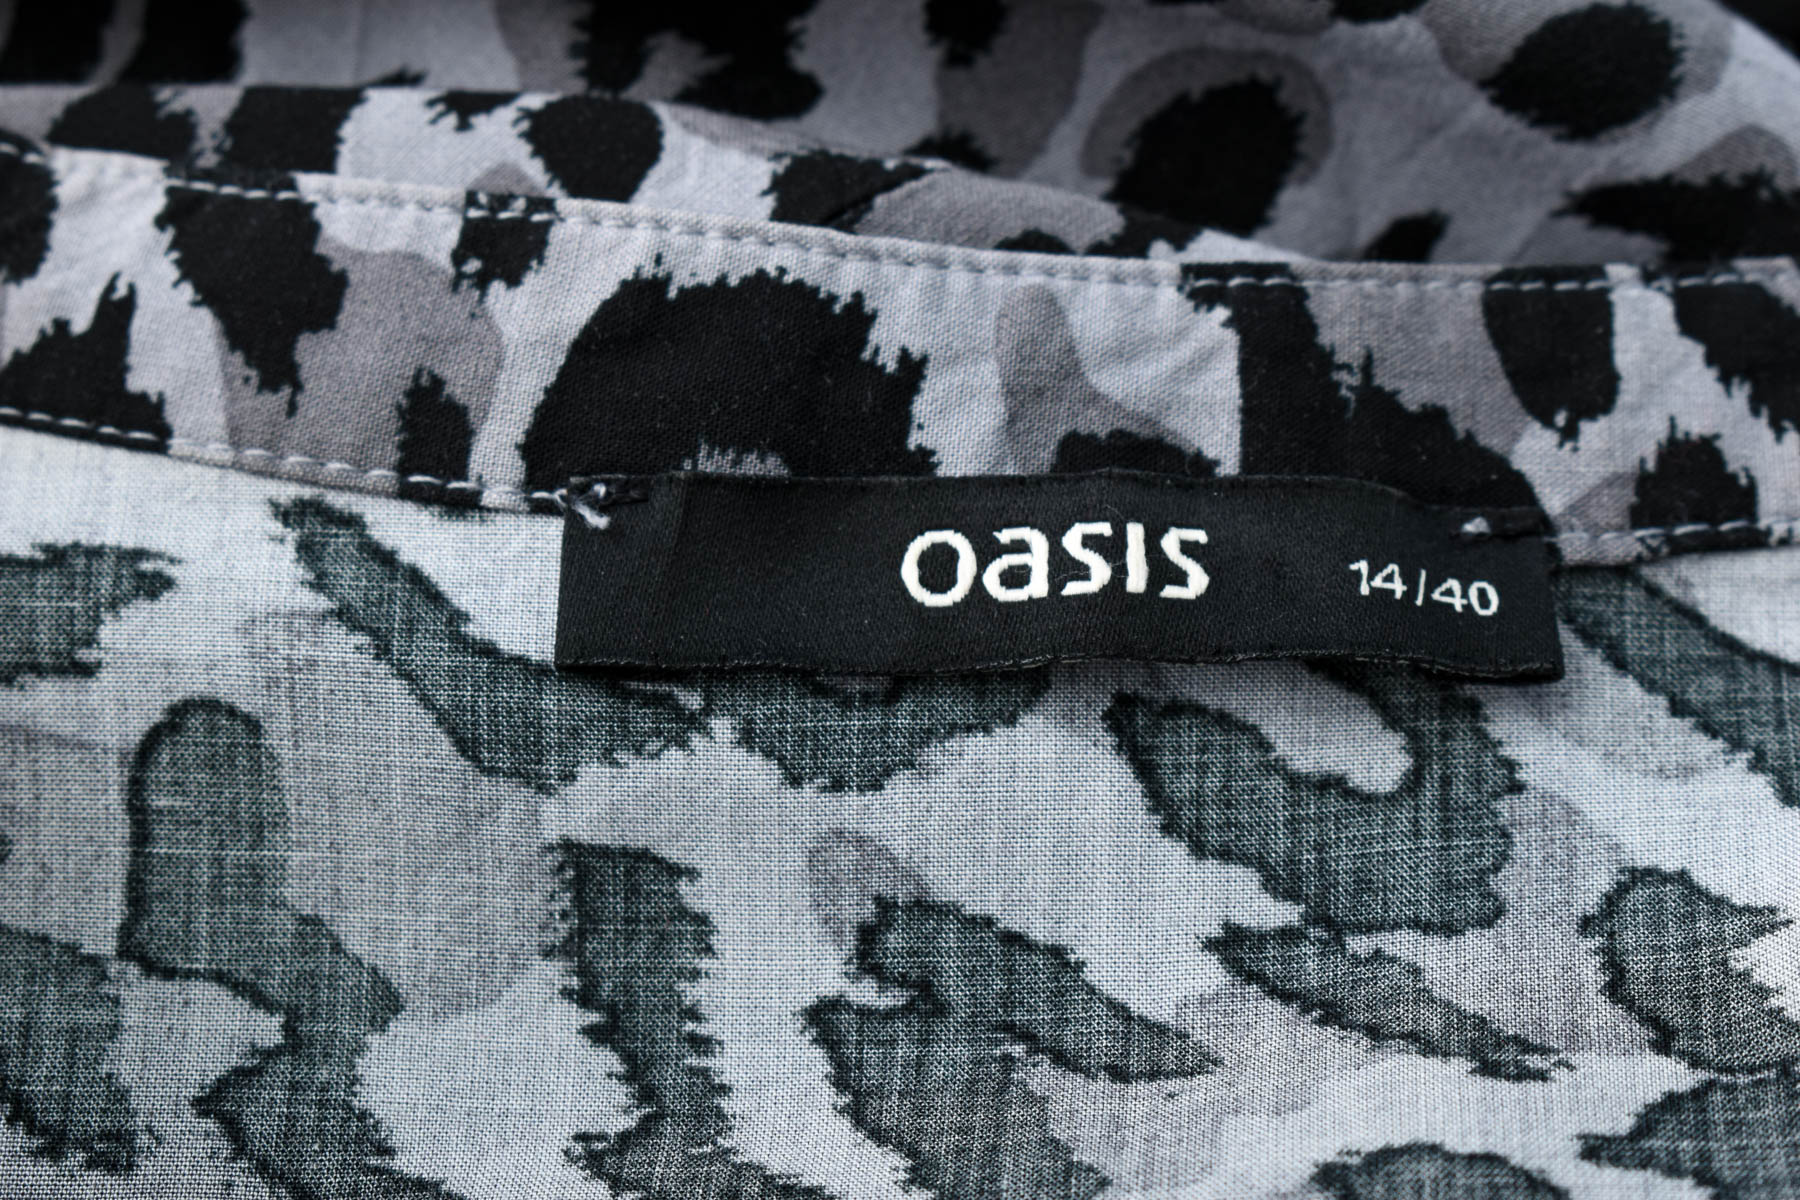 Women's shirt - Oasis - 2